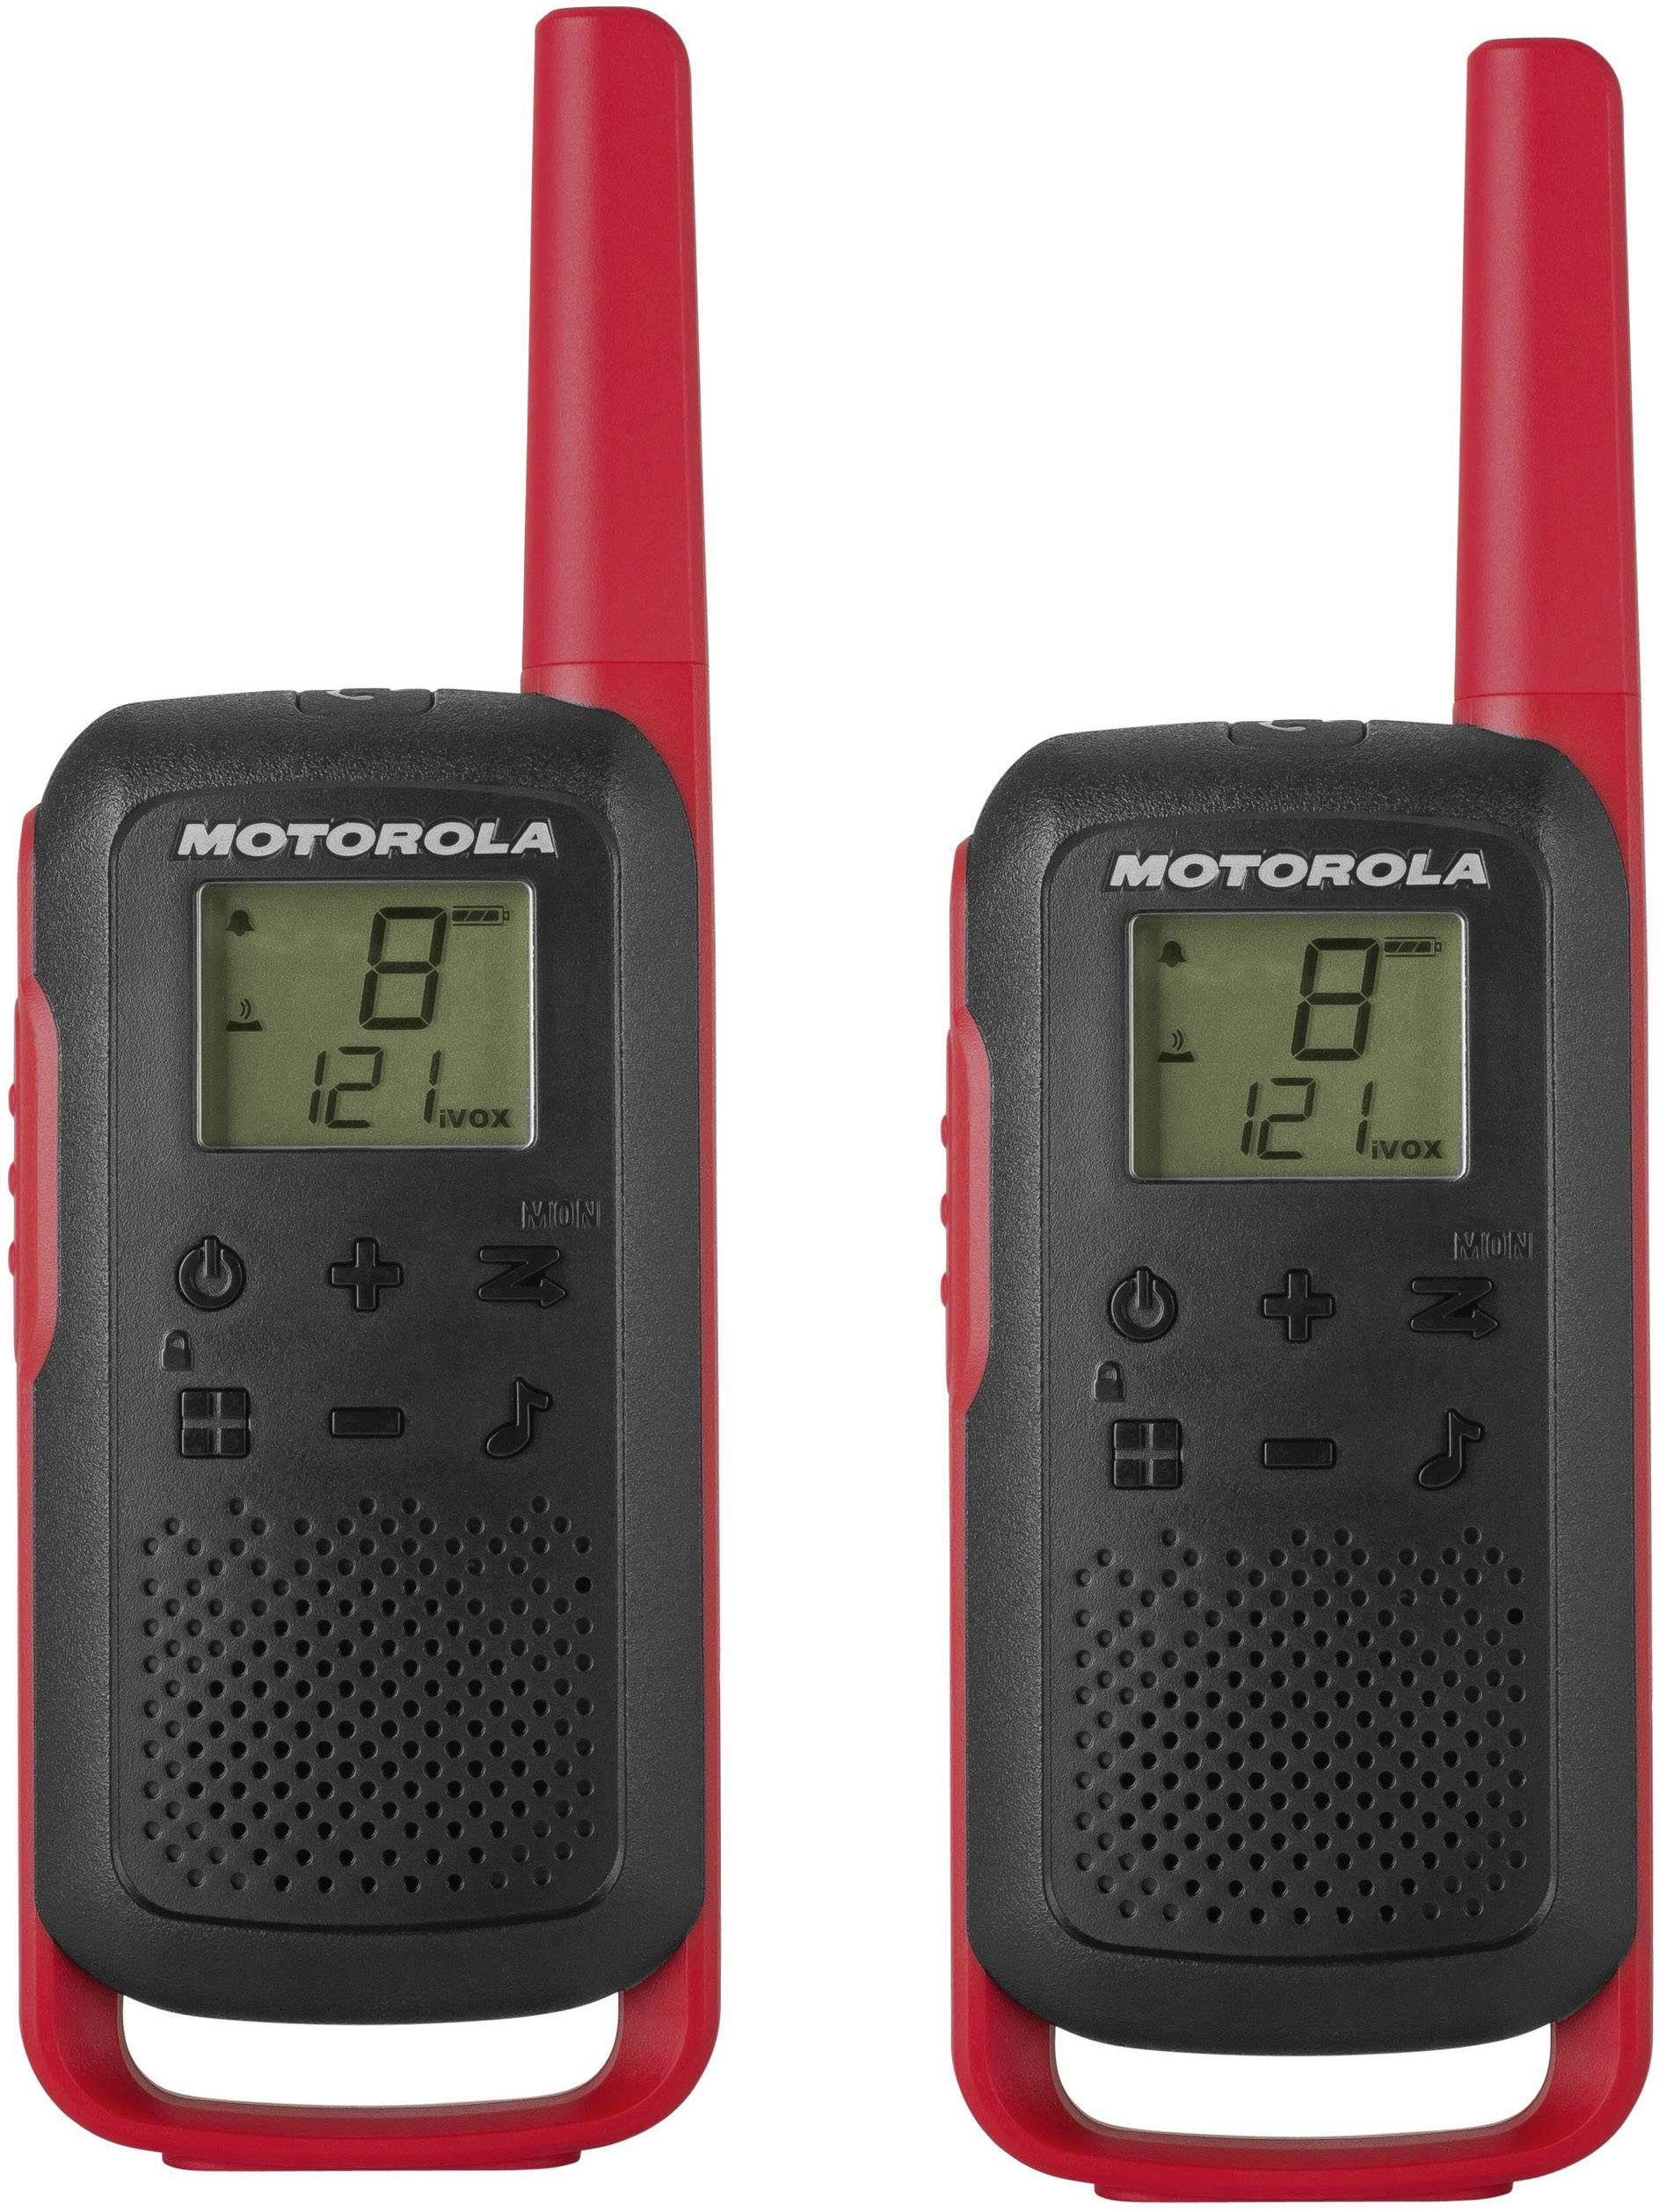 Motorola Talkabout T280 Walkie Talkies Emergency Preparedness Edition